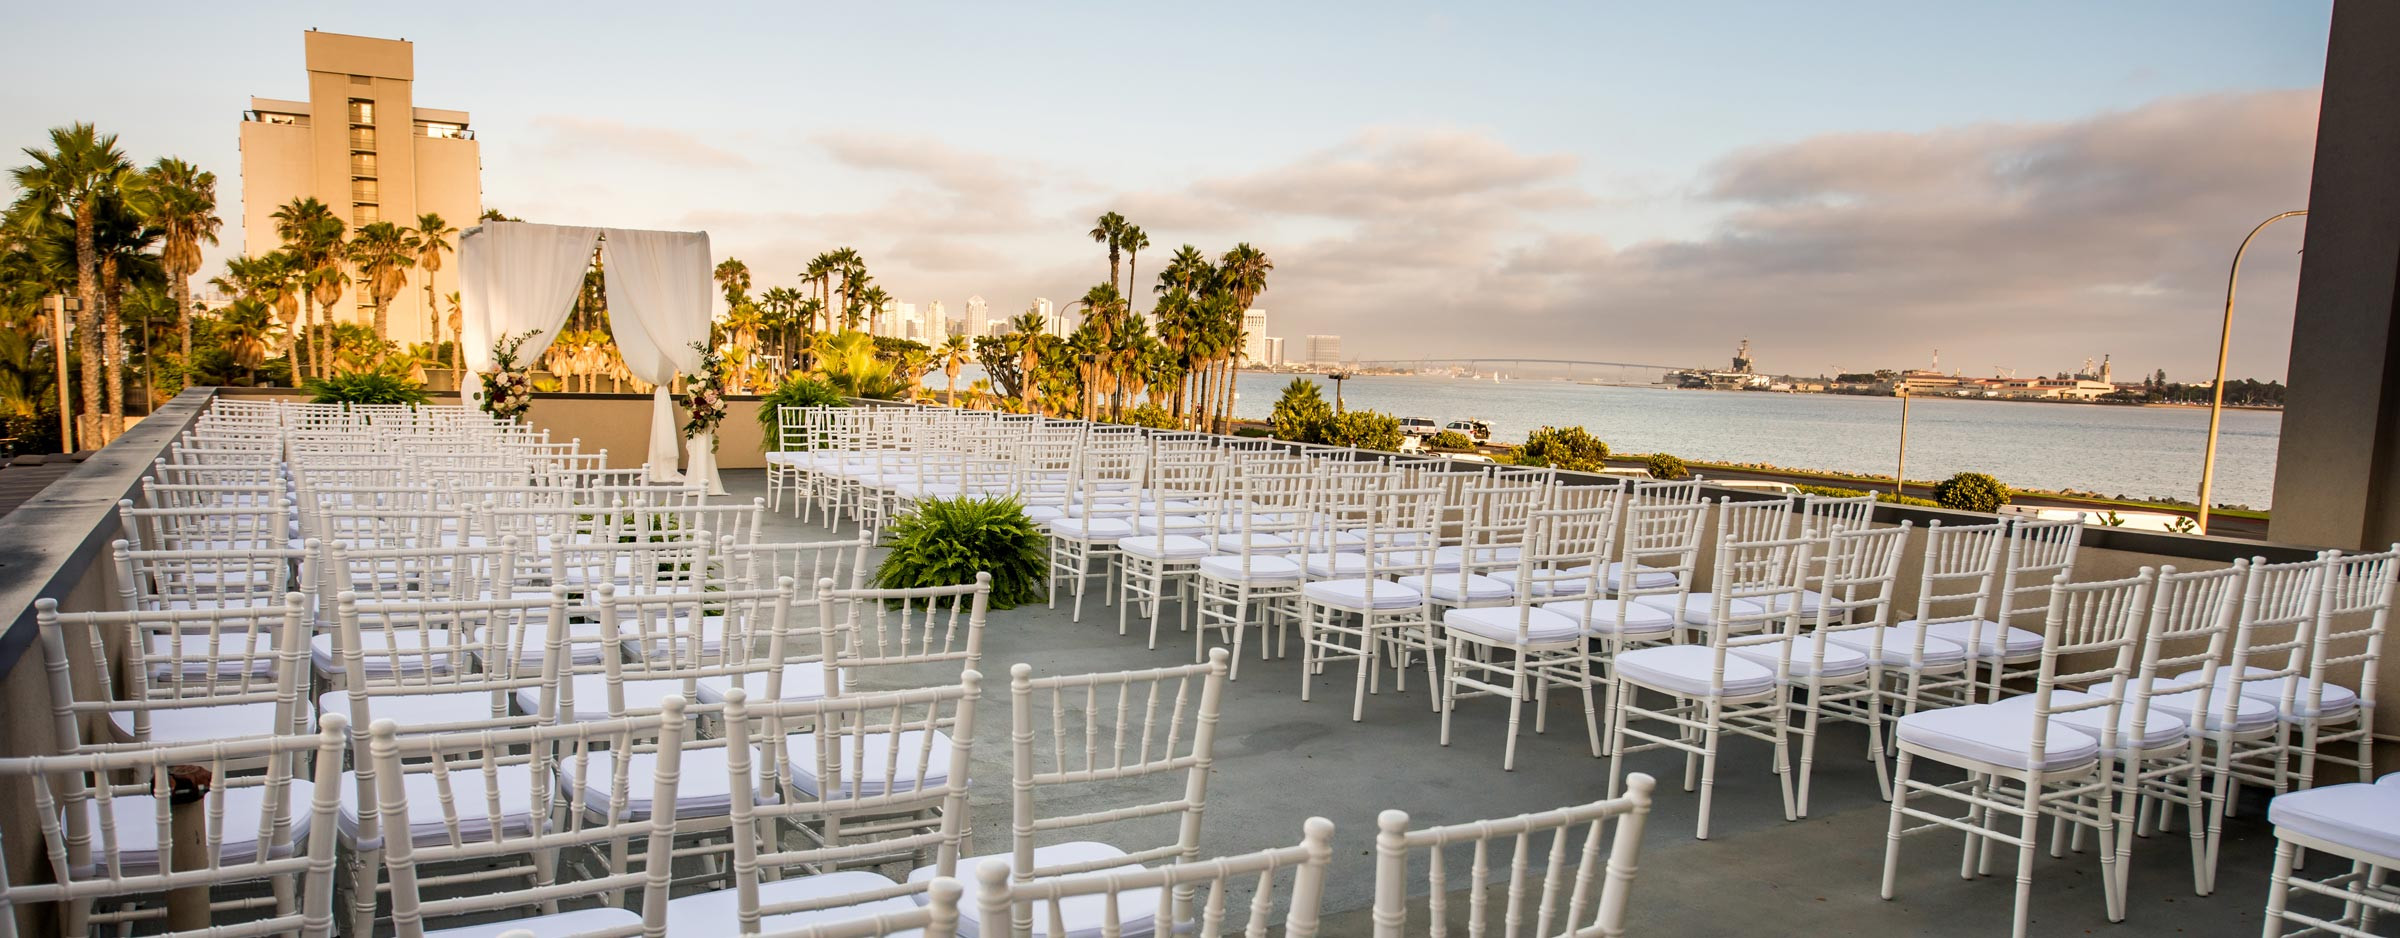 Wedding Venues San Diego
 Best Wedding Venues Harbor Island in San Diego